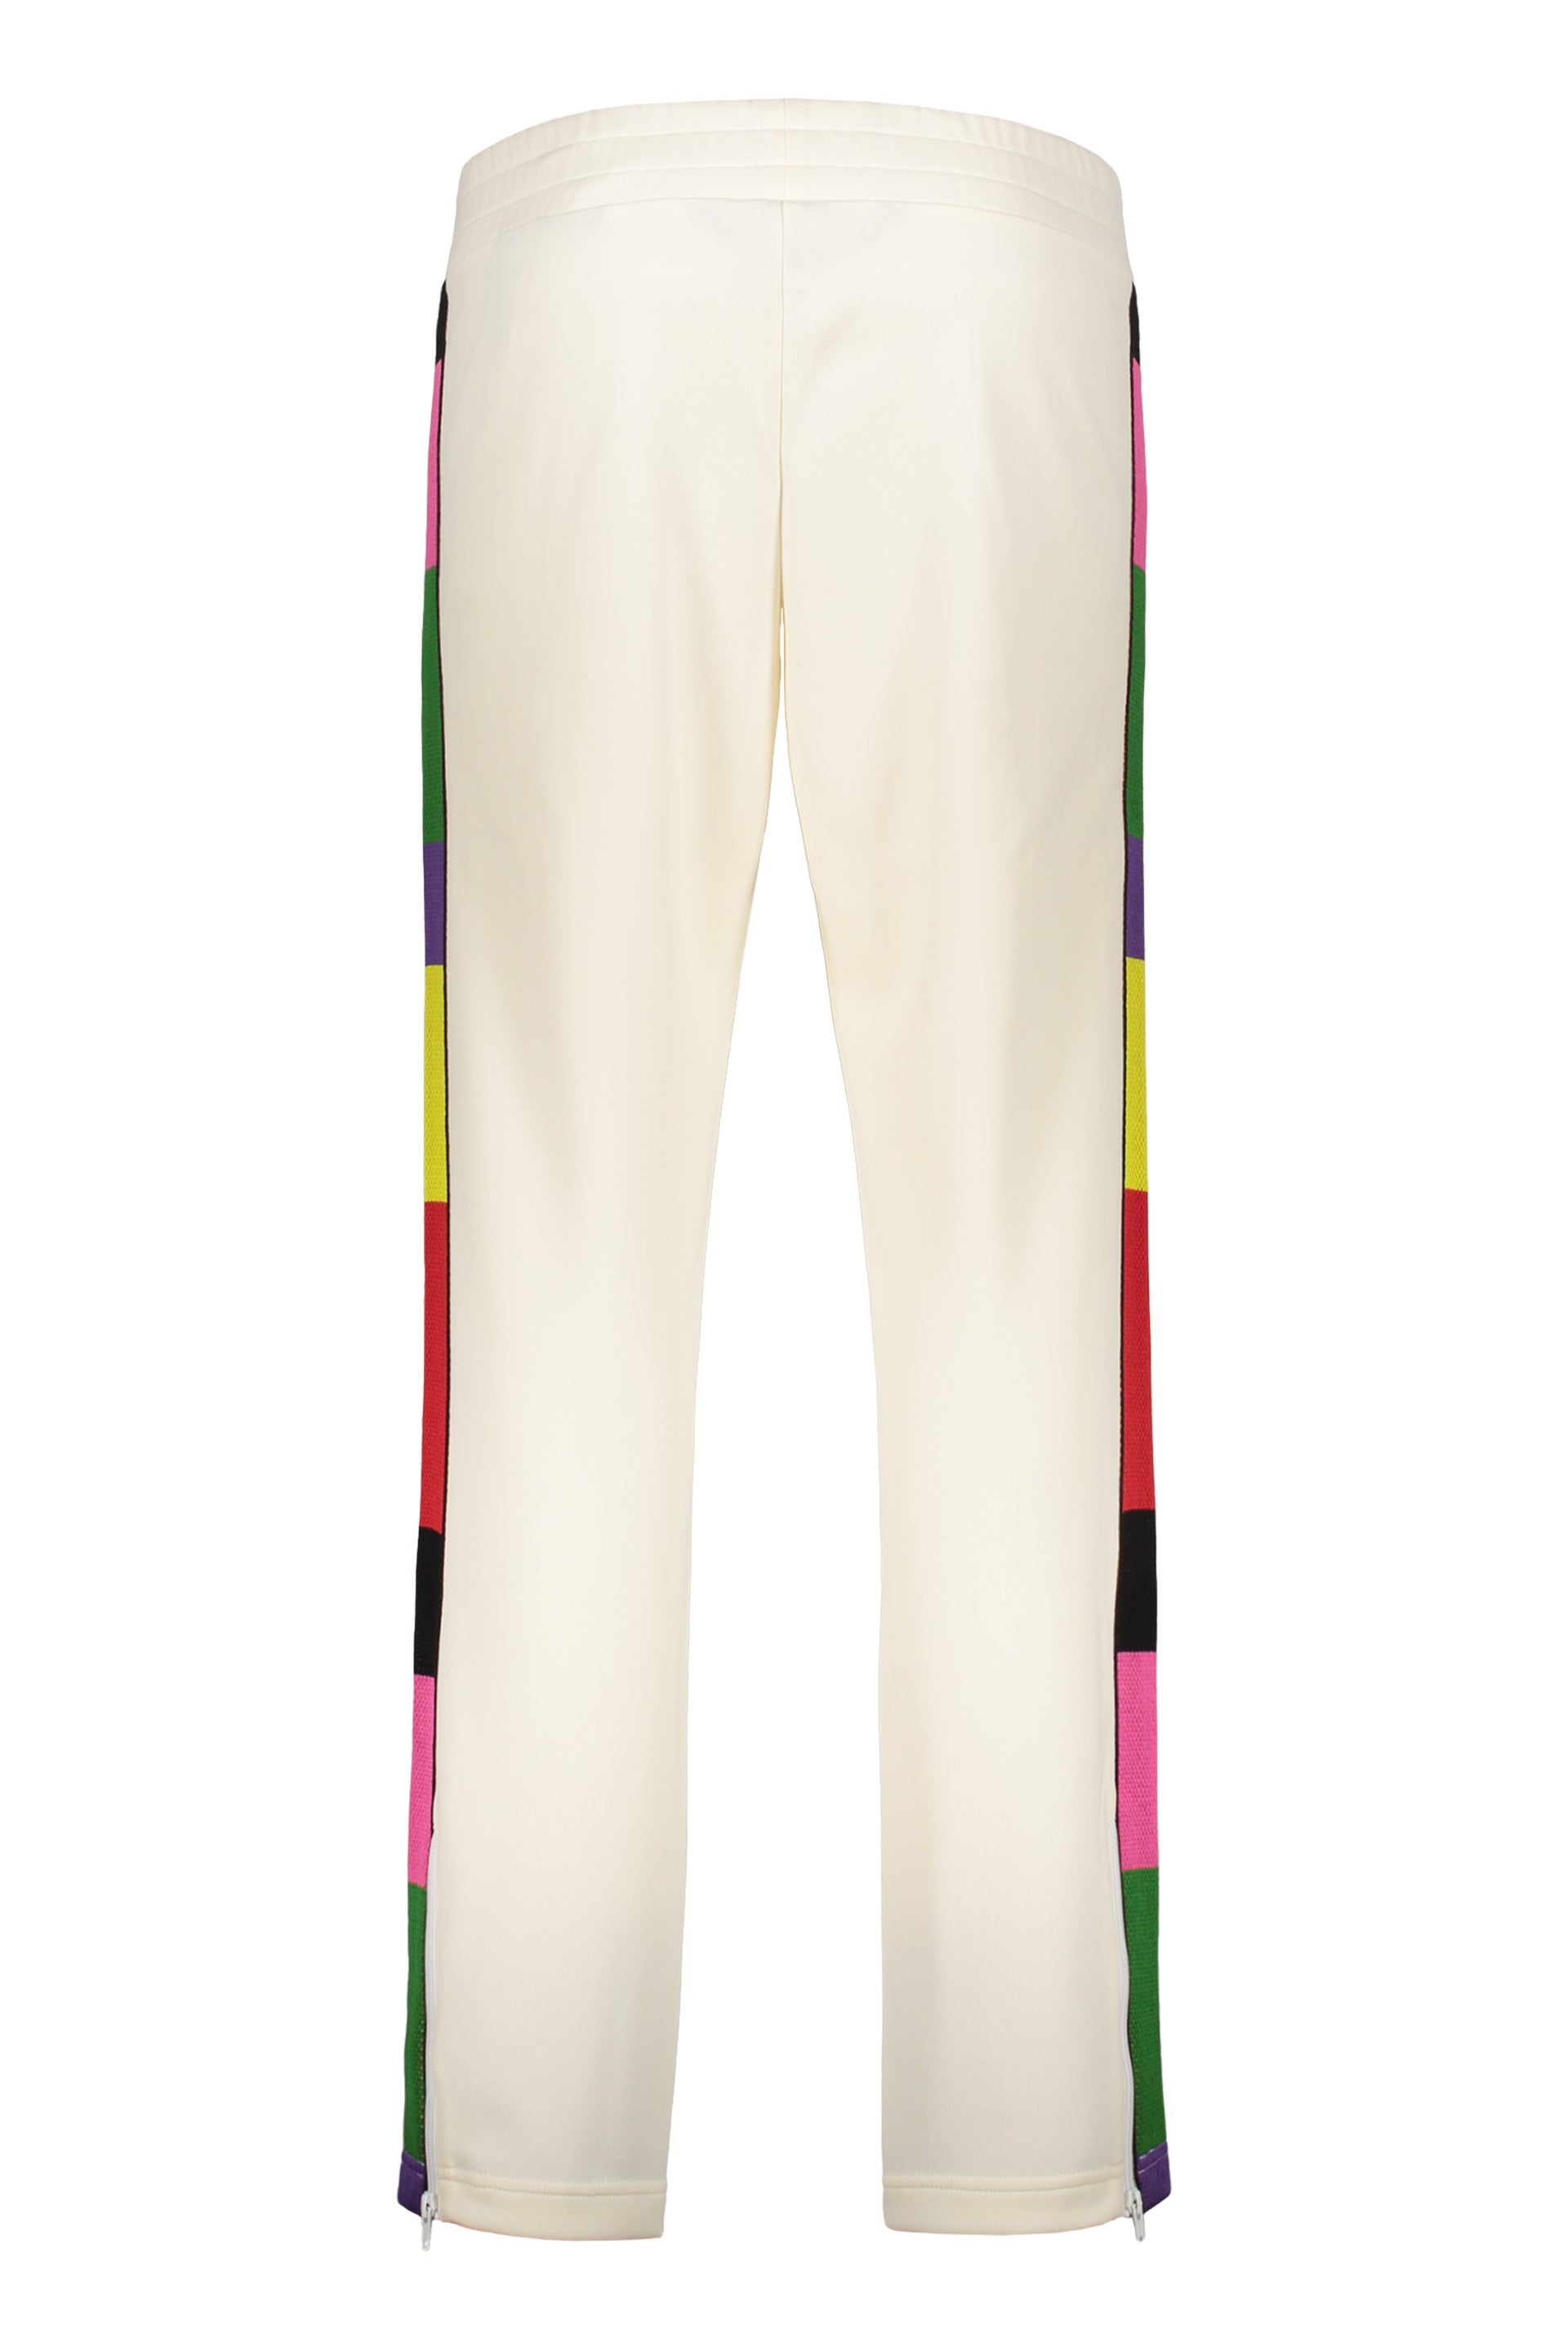 Palm Angels X Missoni track-pants with decorative stripes